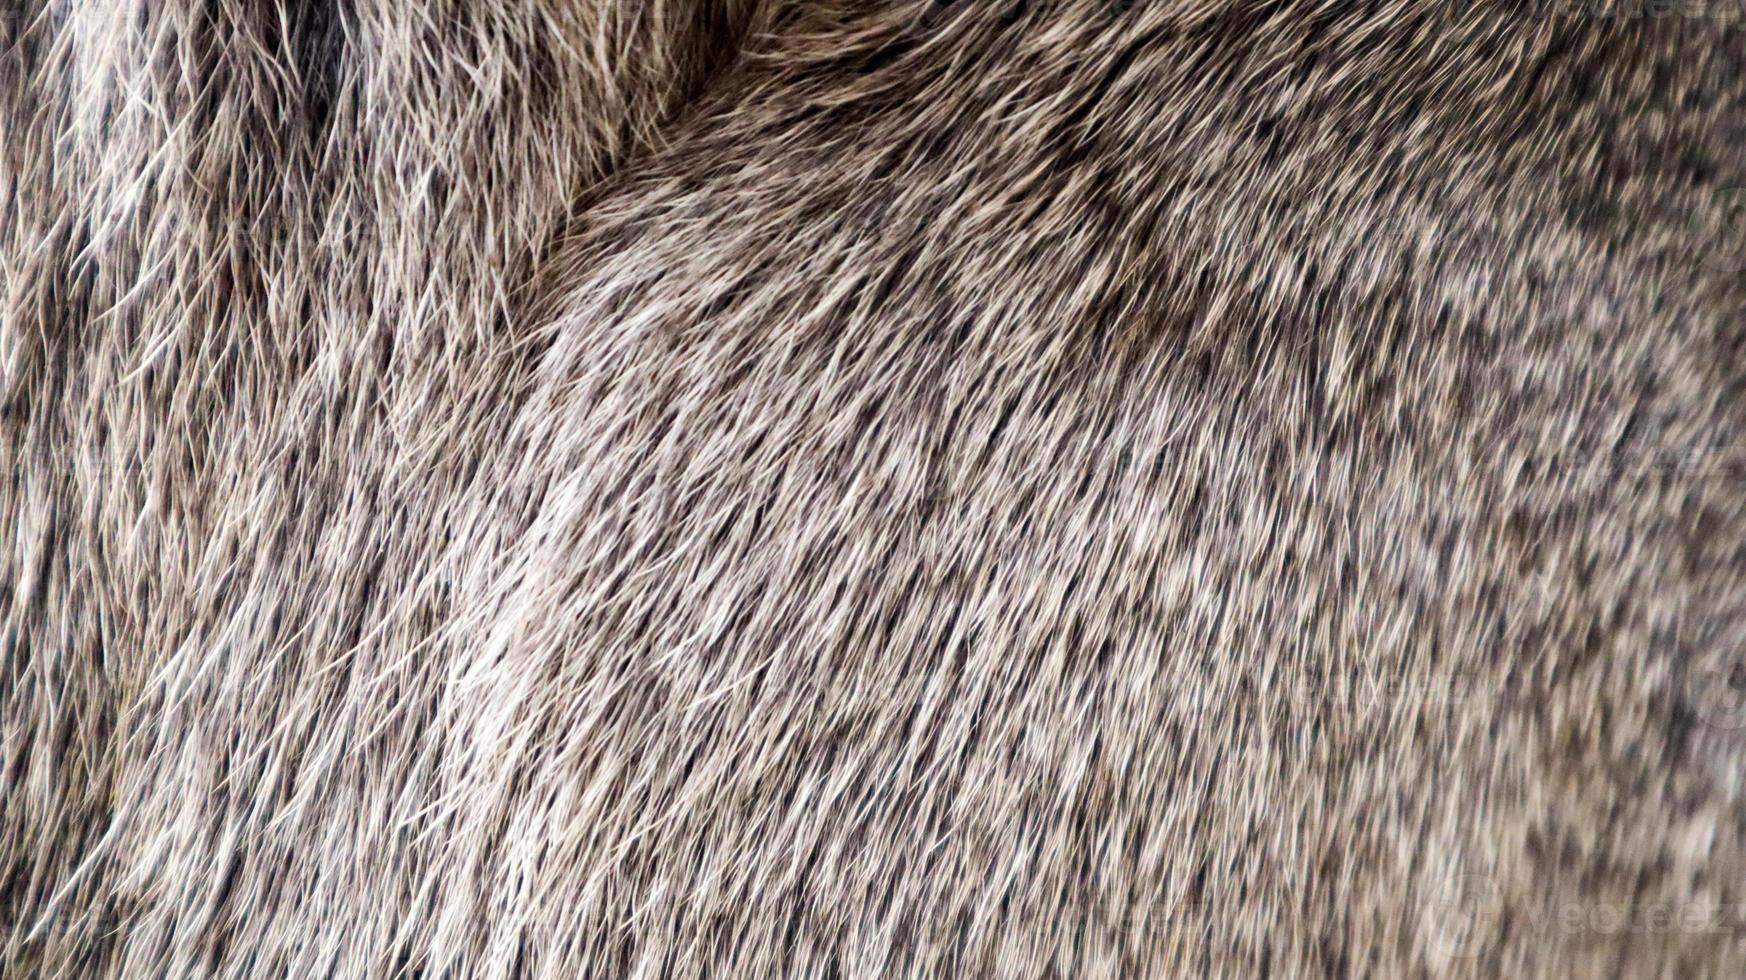 Mule deer fur background texture image. Gray fur close-up. Thailand Fur of deer female photo